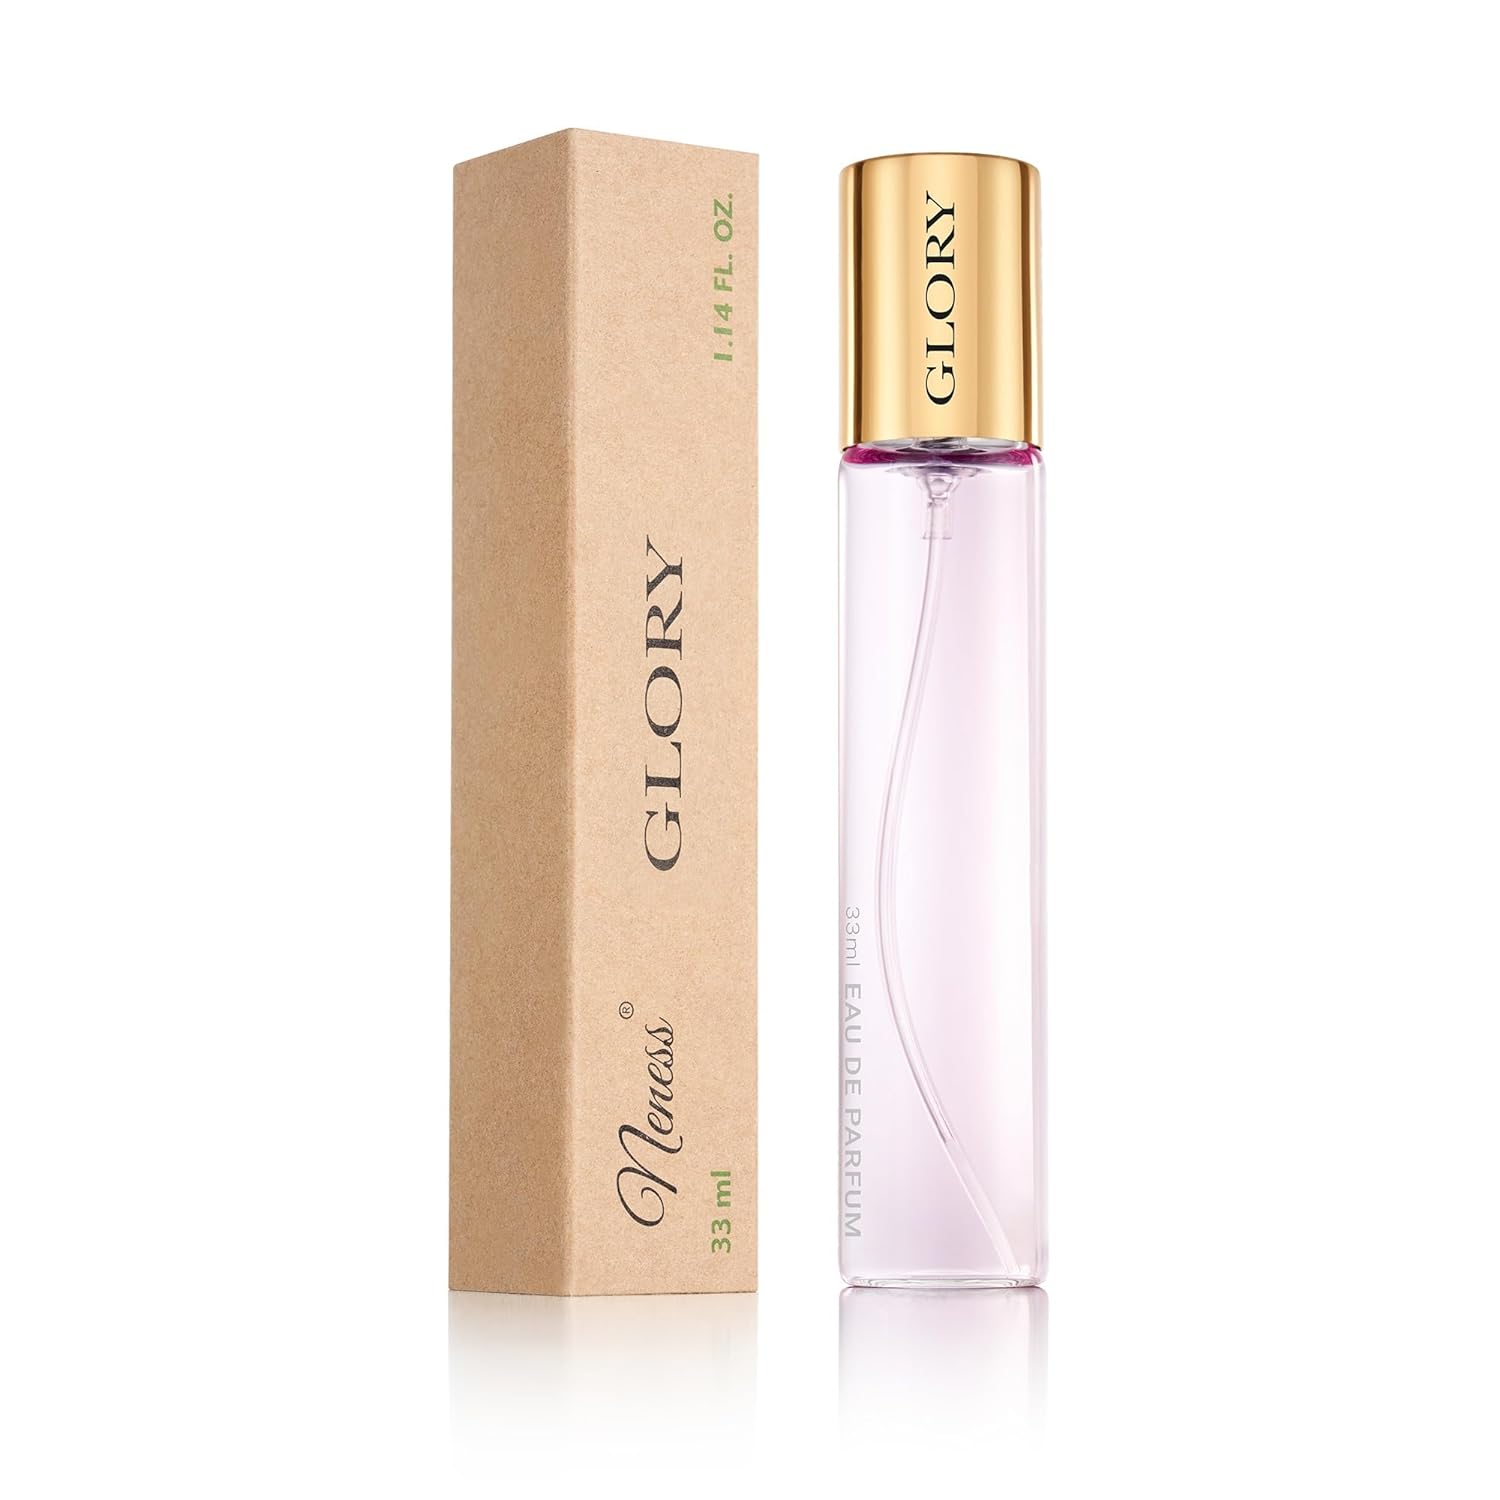 Neness My Idol Woman Women\'s Perfume, Eau de Parfum, Bold and Feminine Fragrance for Any Occasion, 33 ml